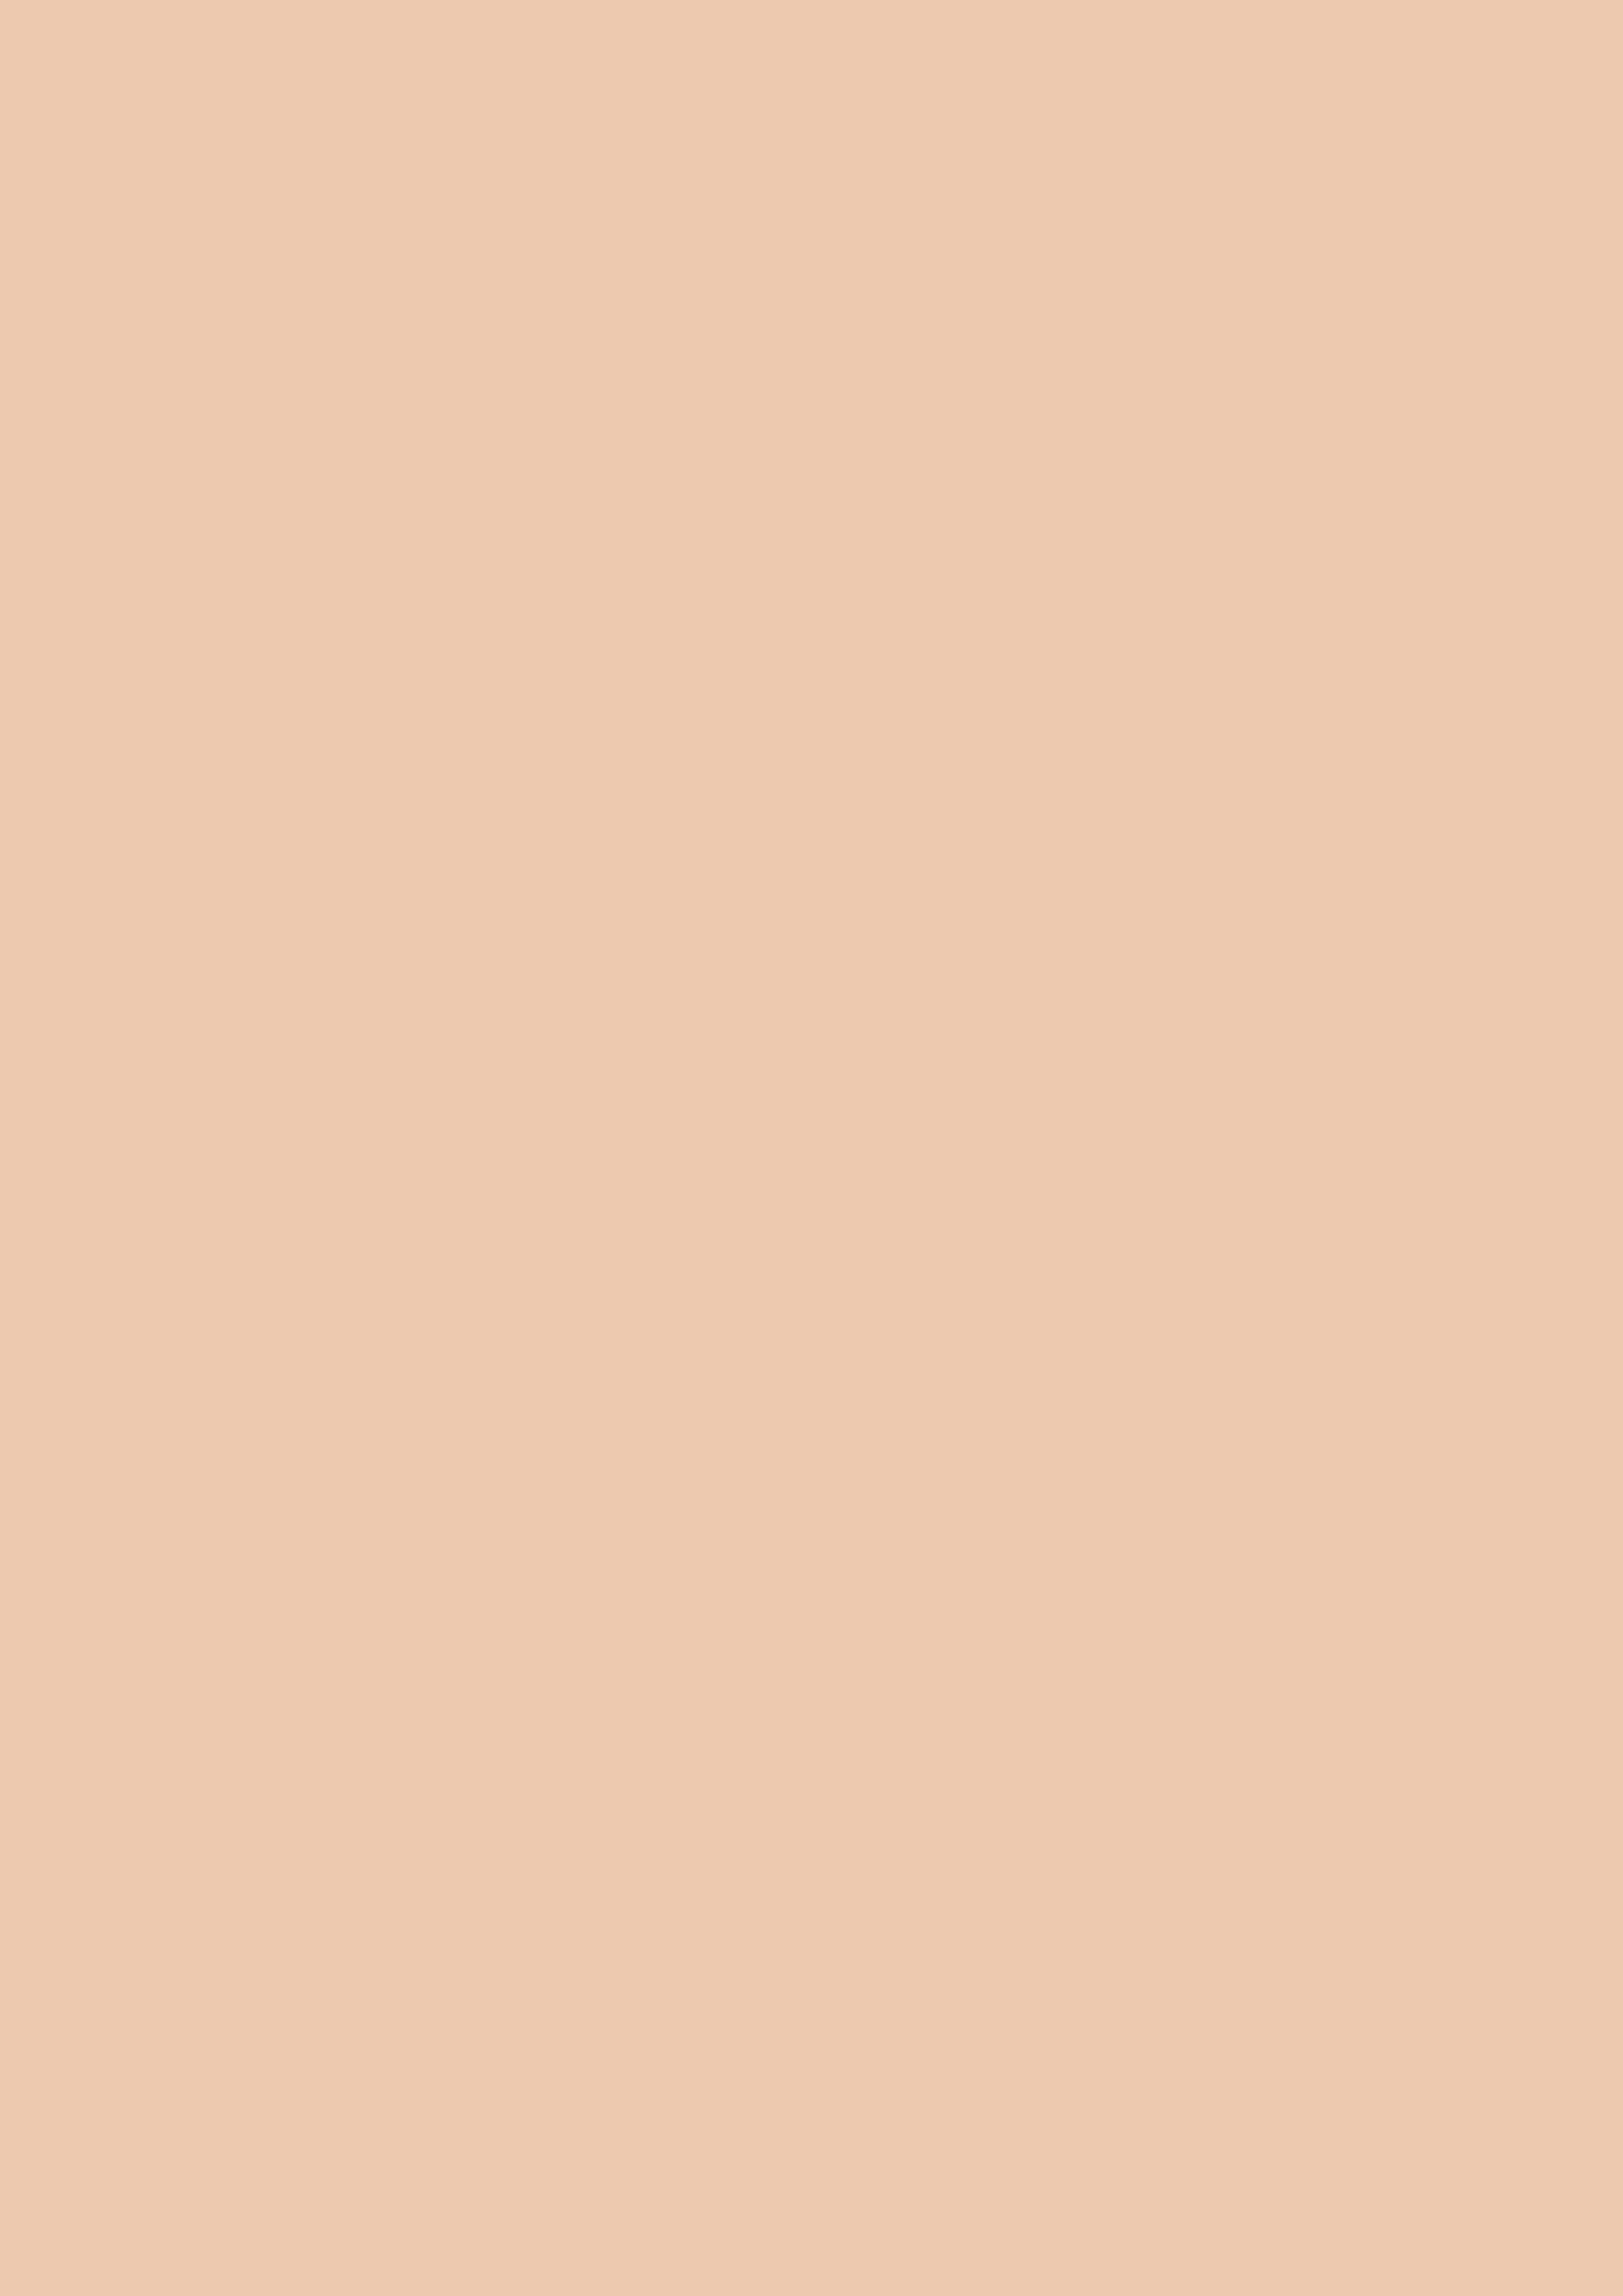 2480x3508 Desert Sand Solid Color Background